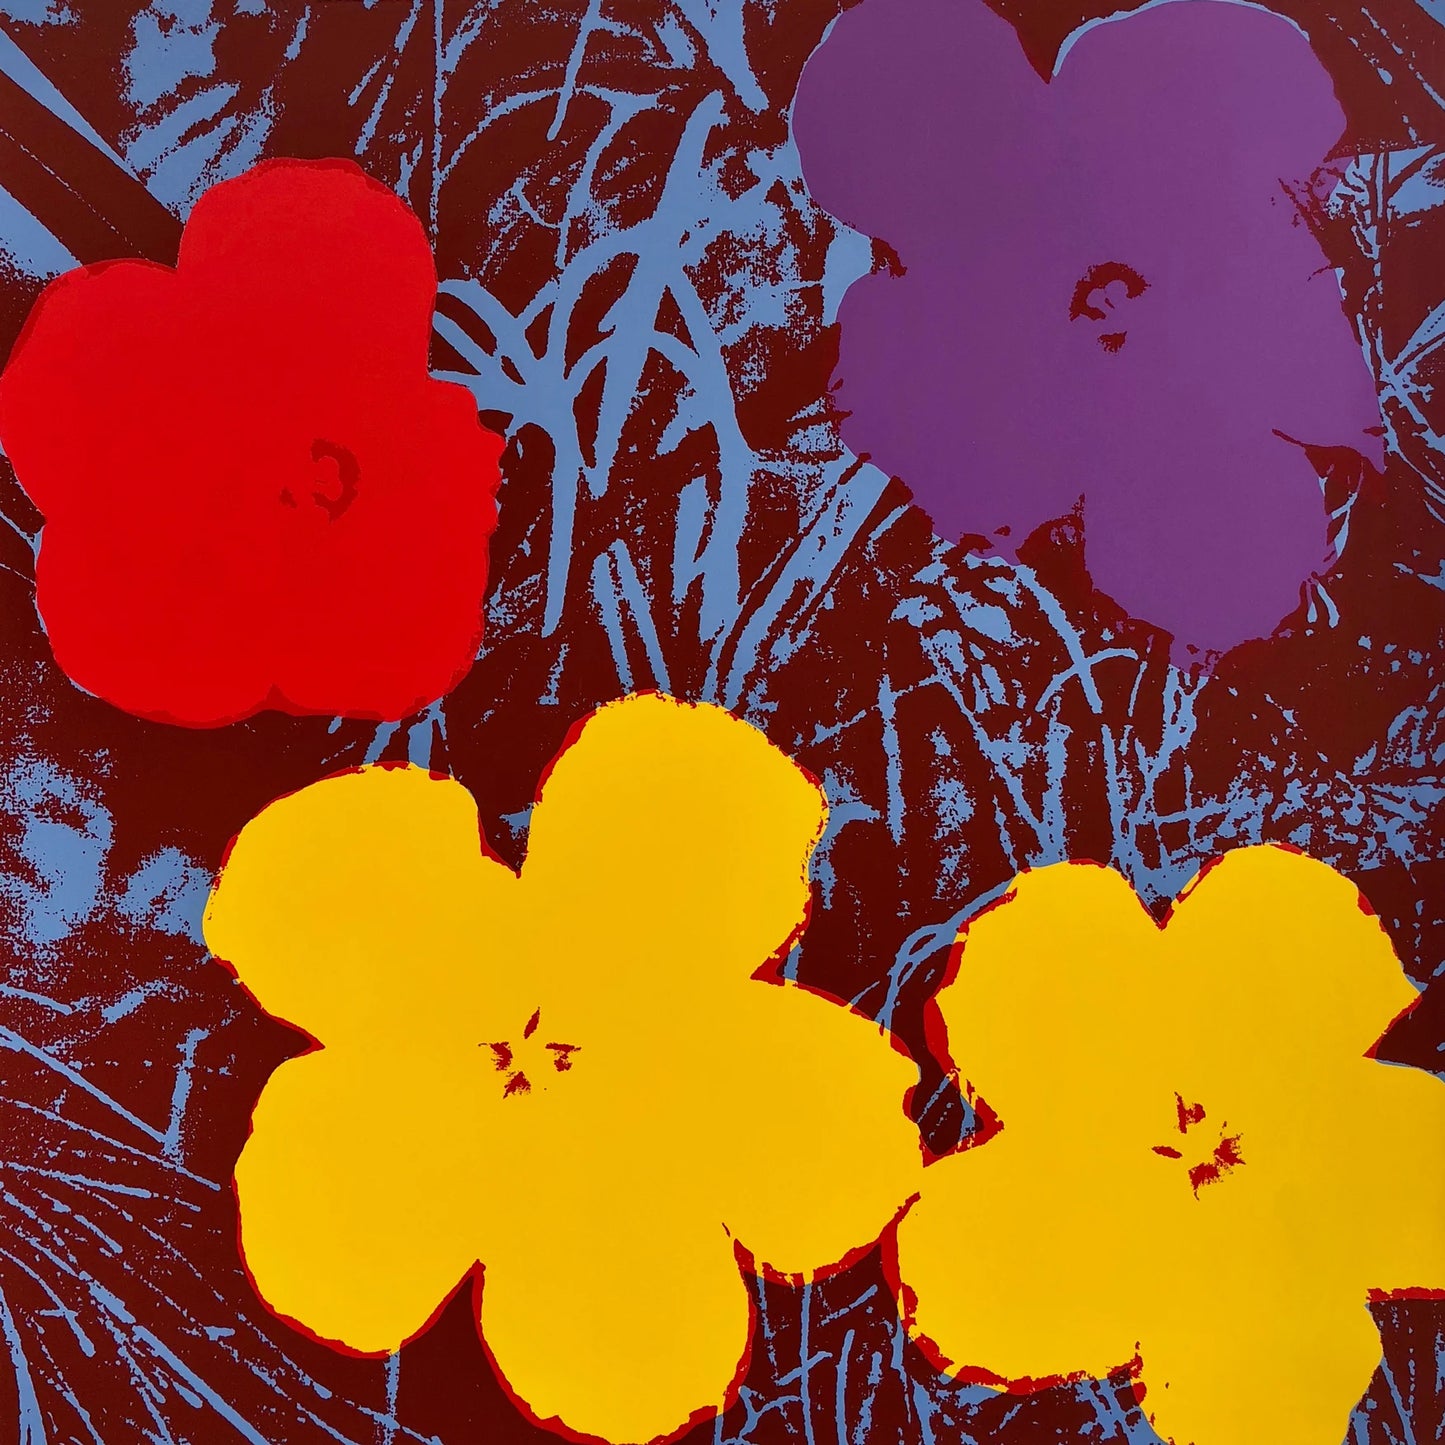 Sunday B. Morning (Andy Warhol), Flowers 11:71